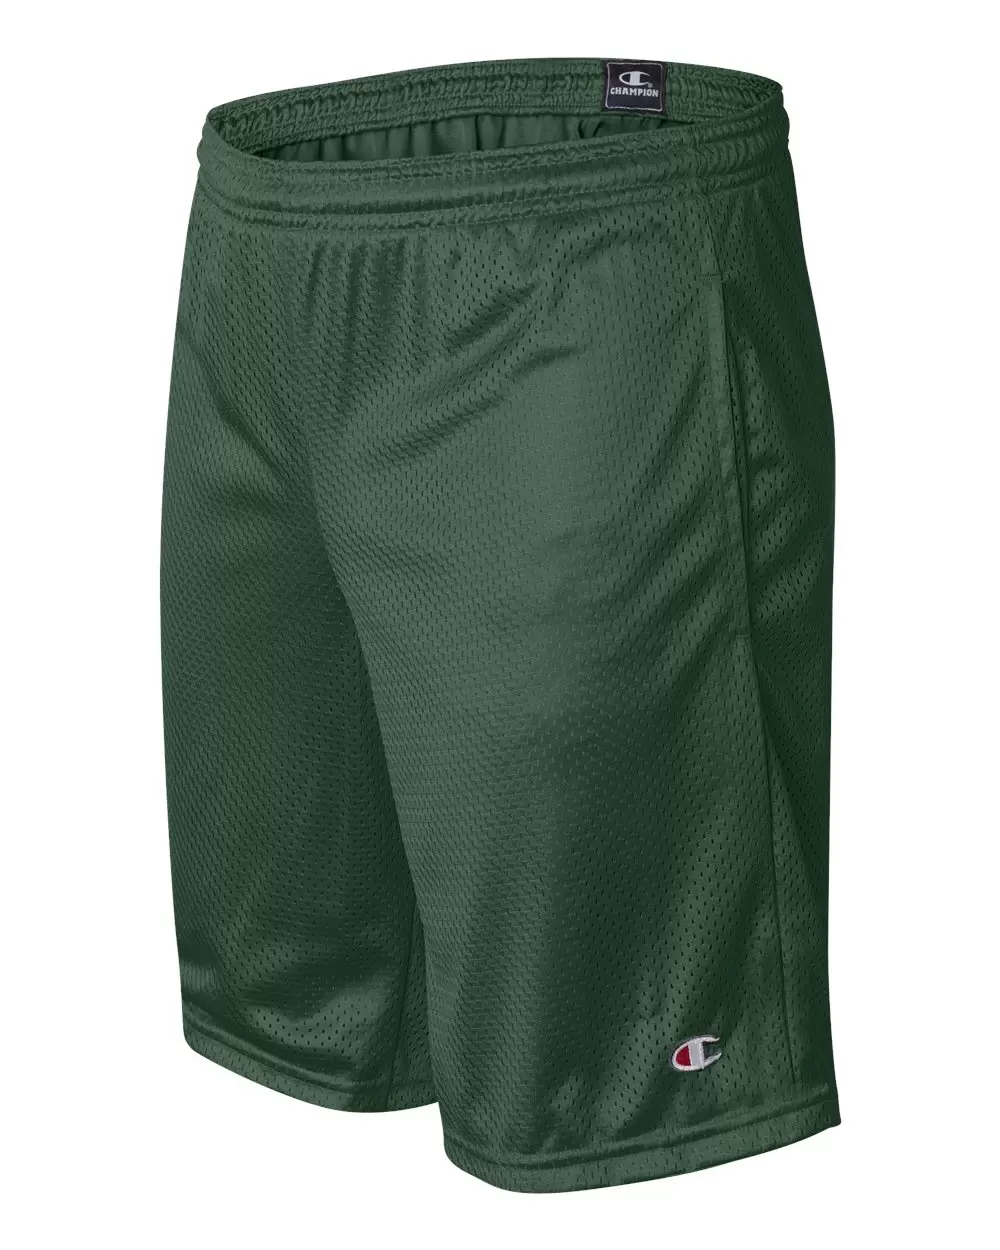 S162 Champion Logo Long Mesh Shorts with Pockets